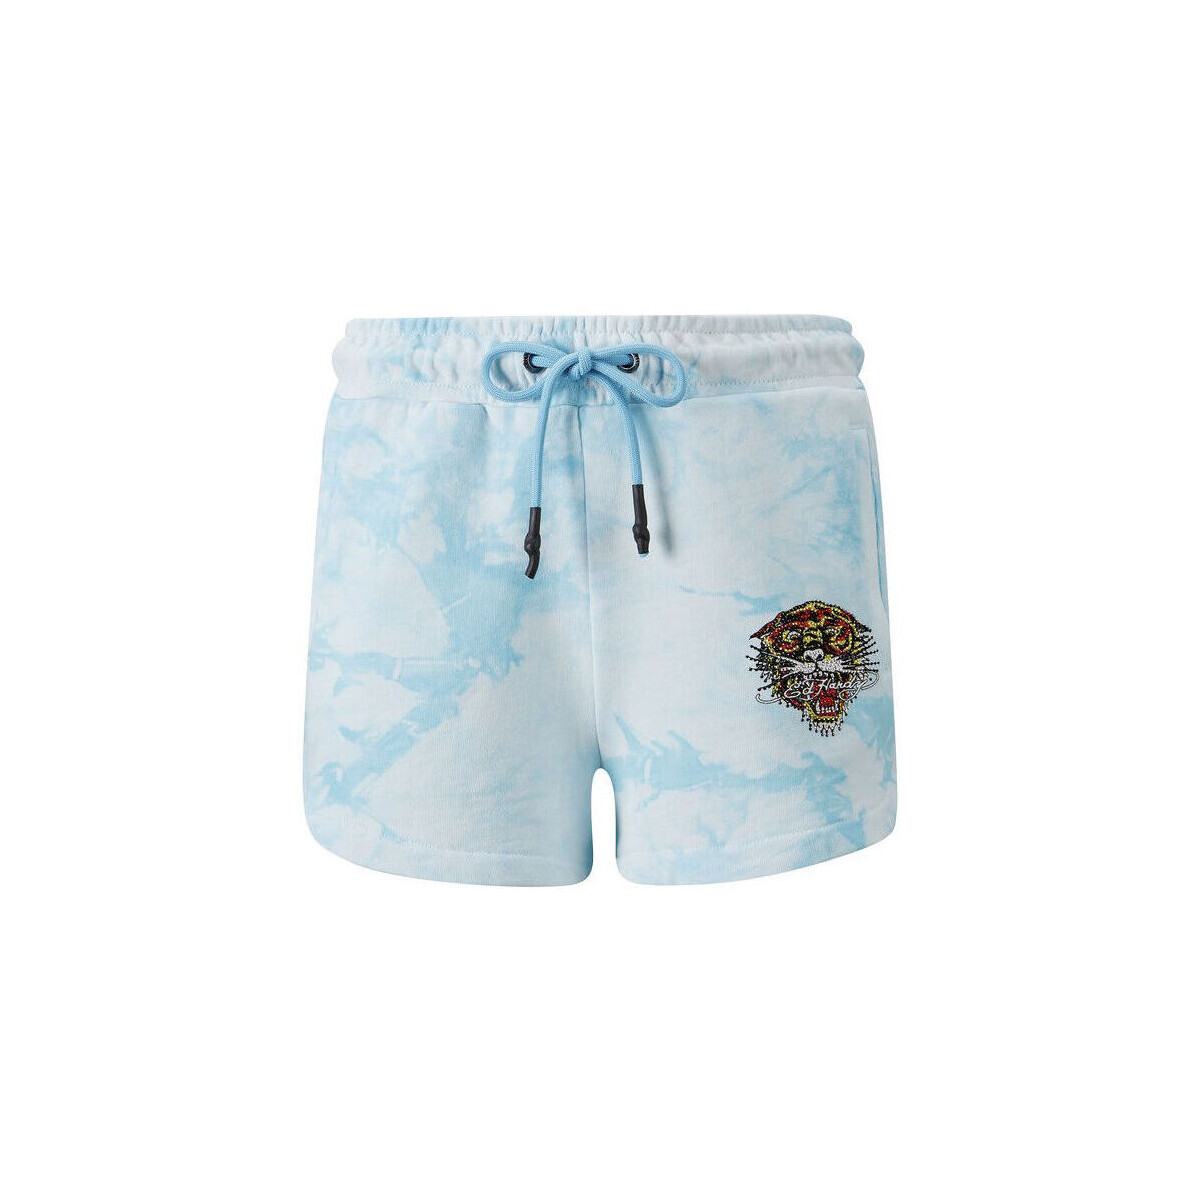 textil Mujer Shorts / Bermudas Ed Hardy Los tigre runner short turquesa Azul